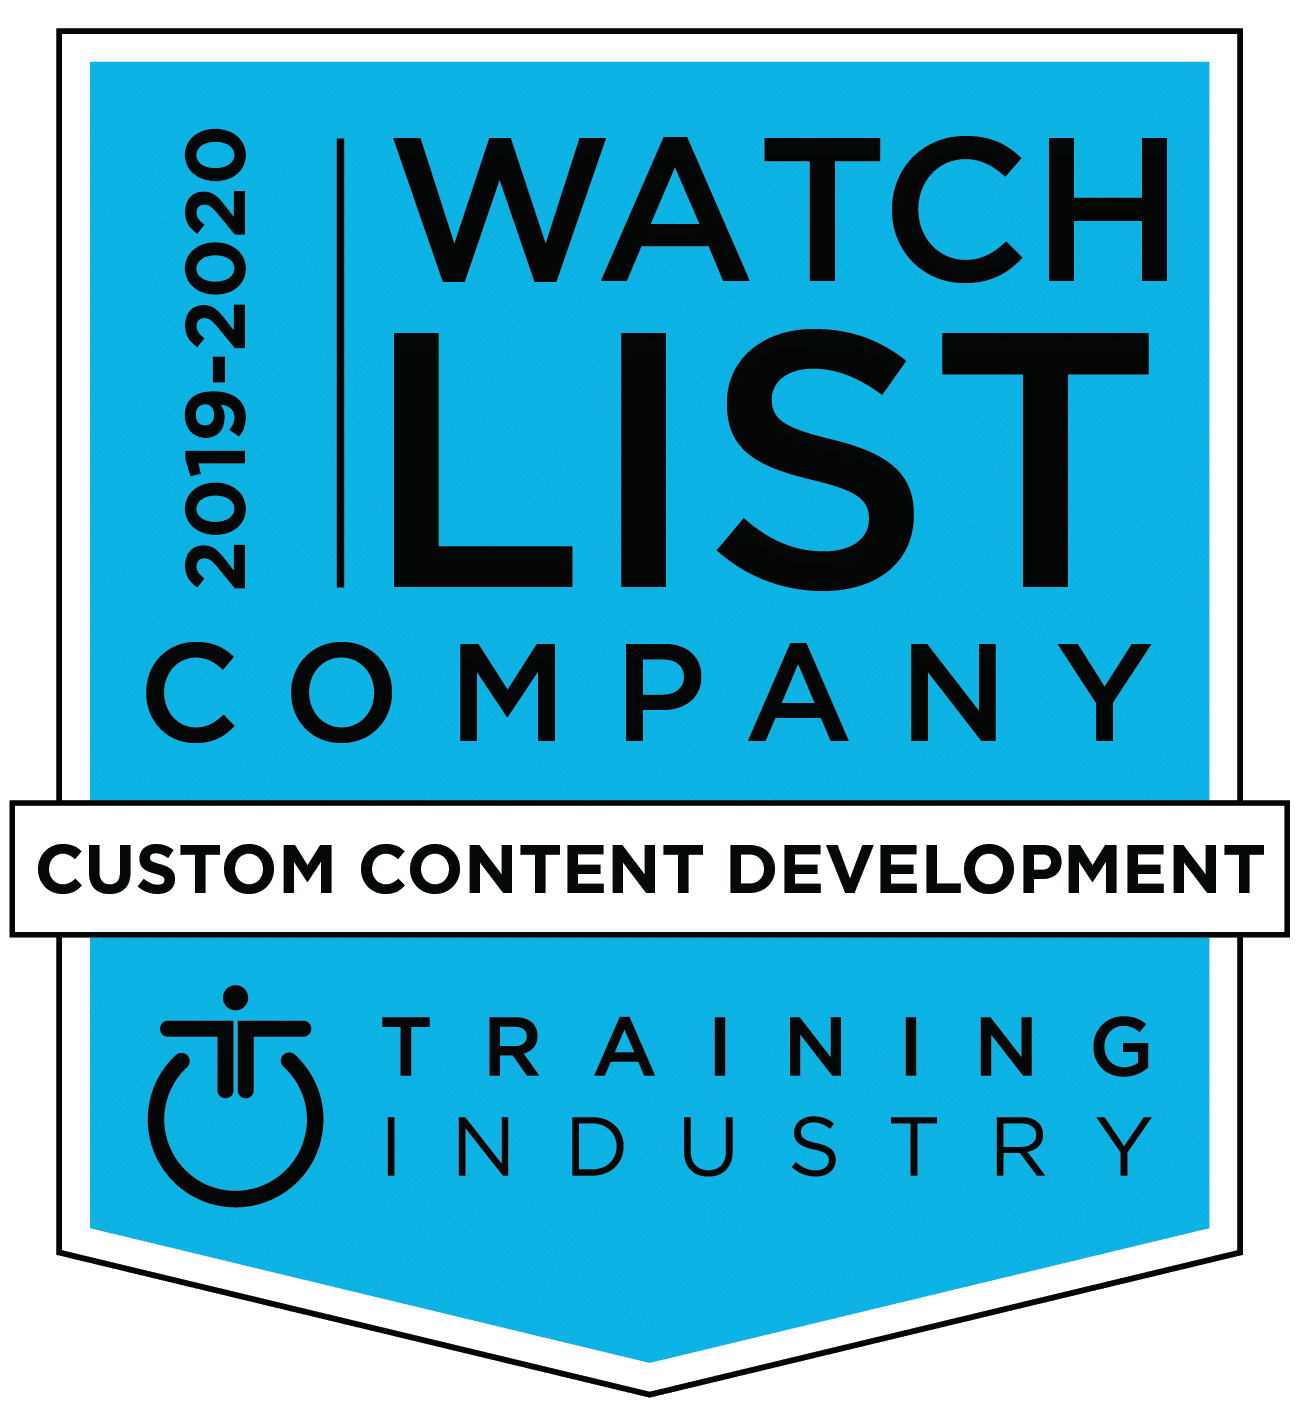 Training Industry Custom Content Development 2018-2020